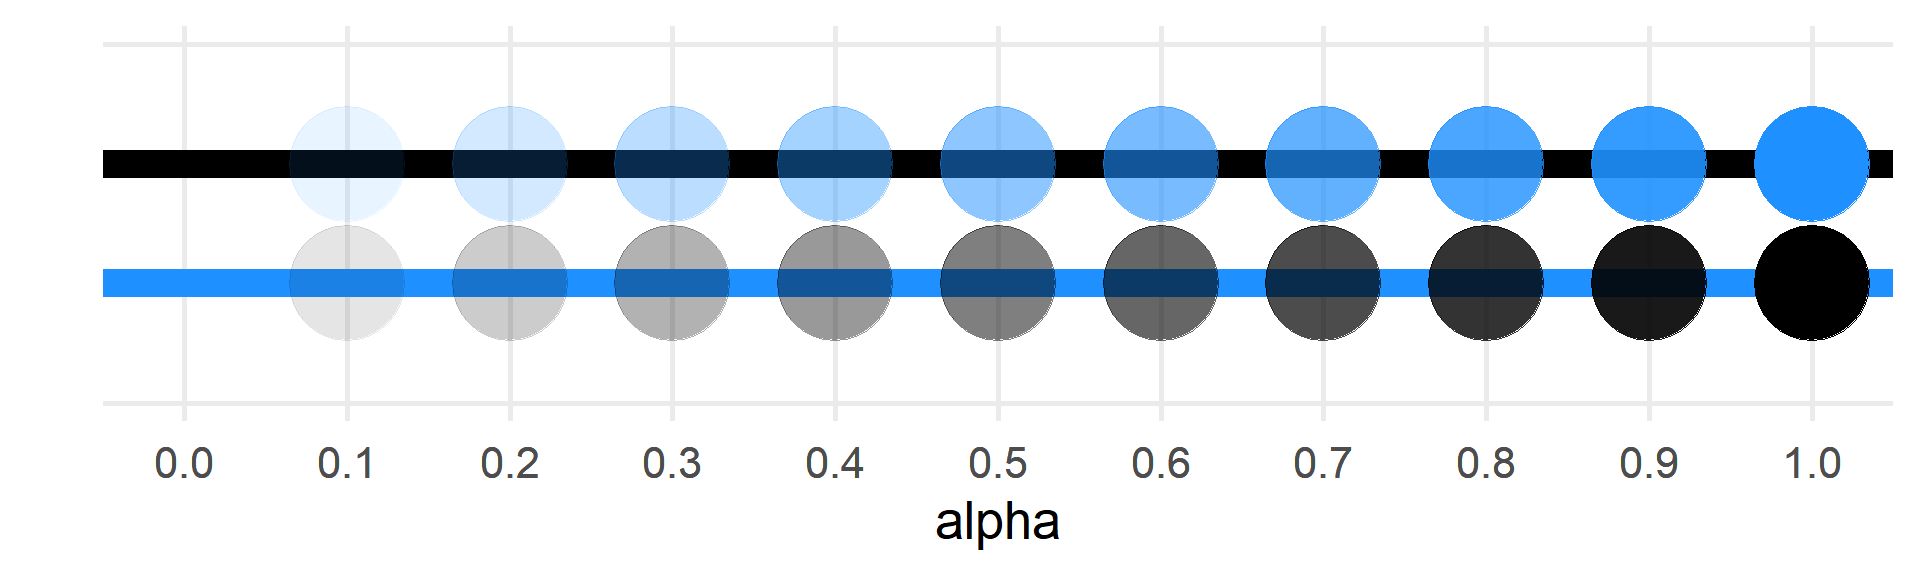 Varying alpha values.